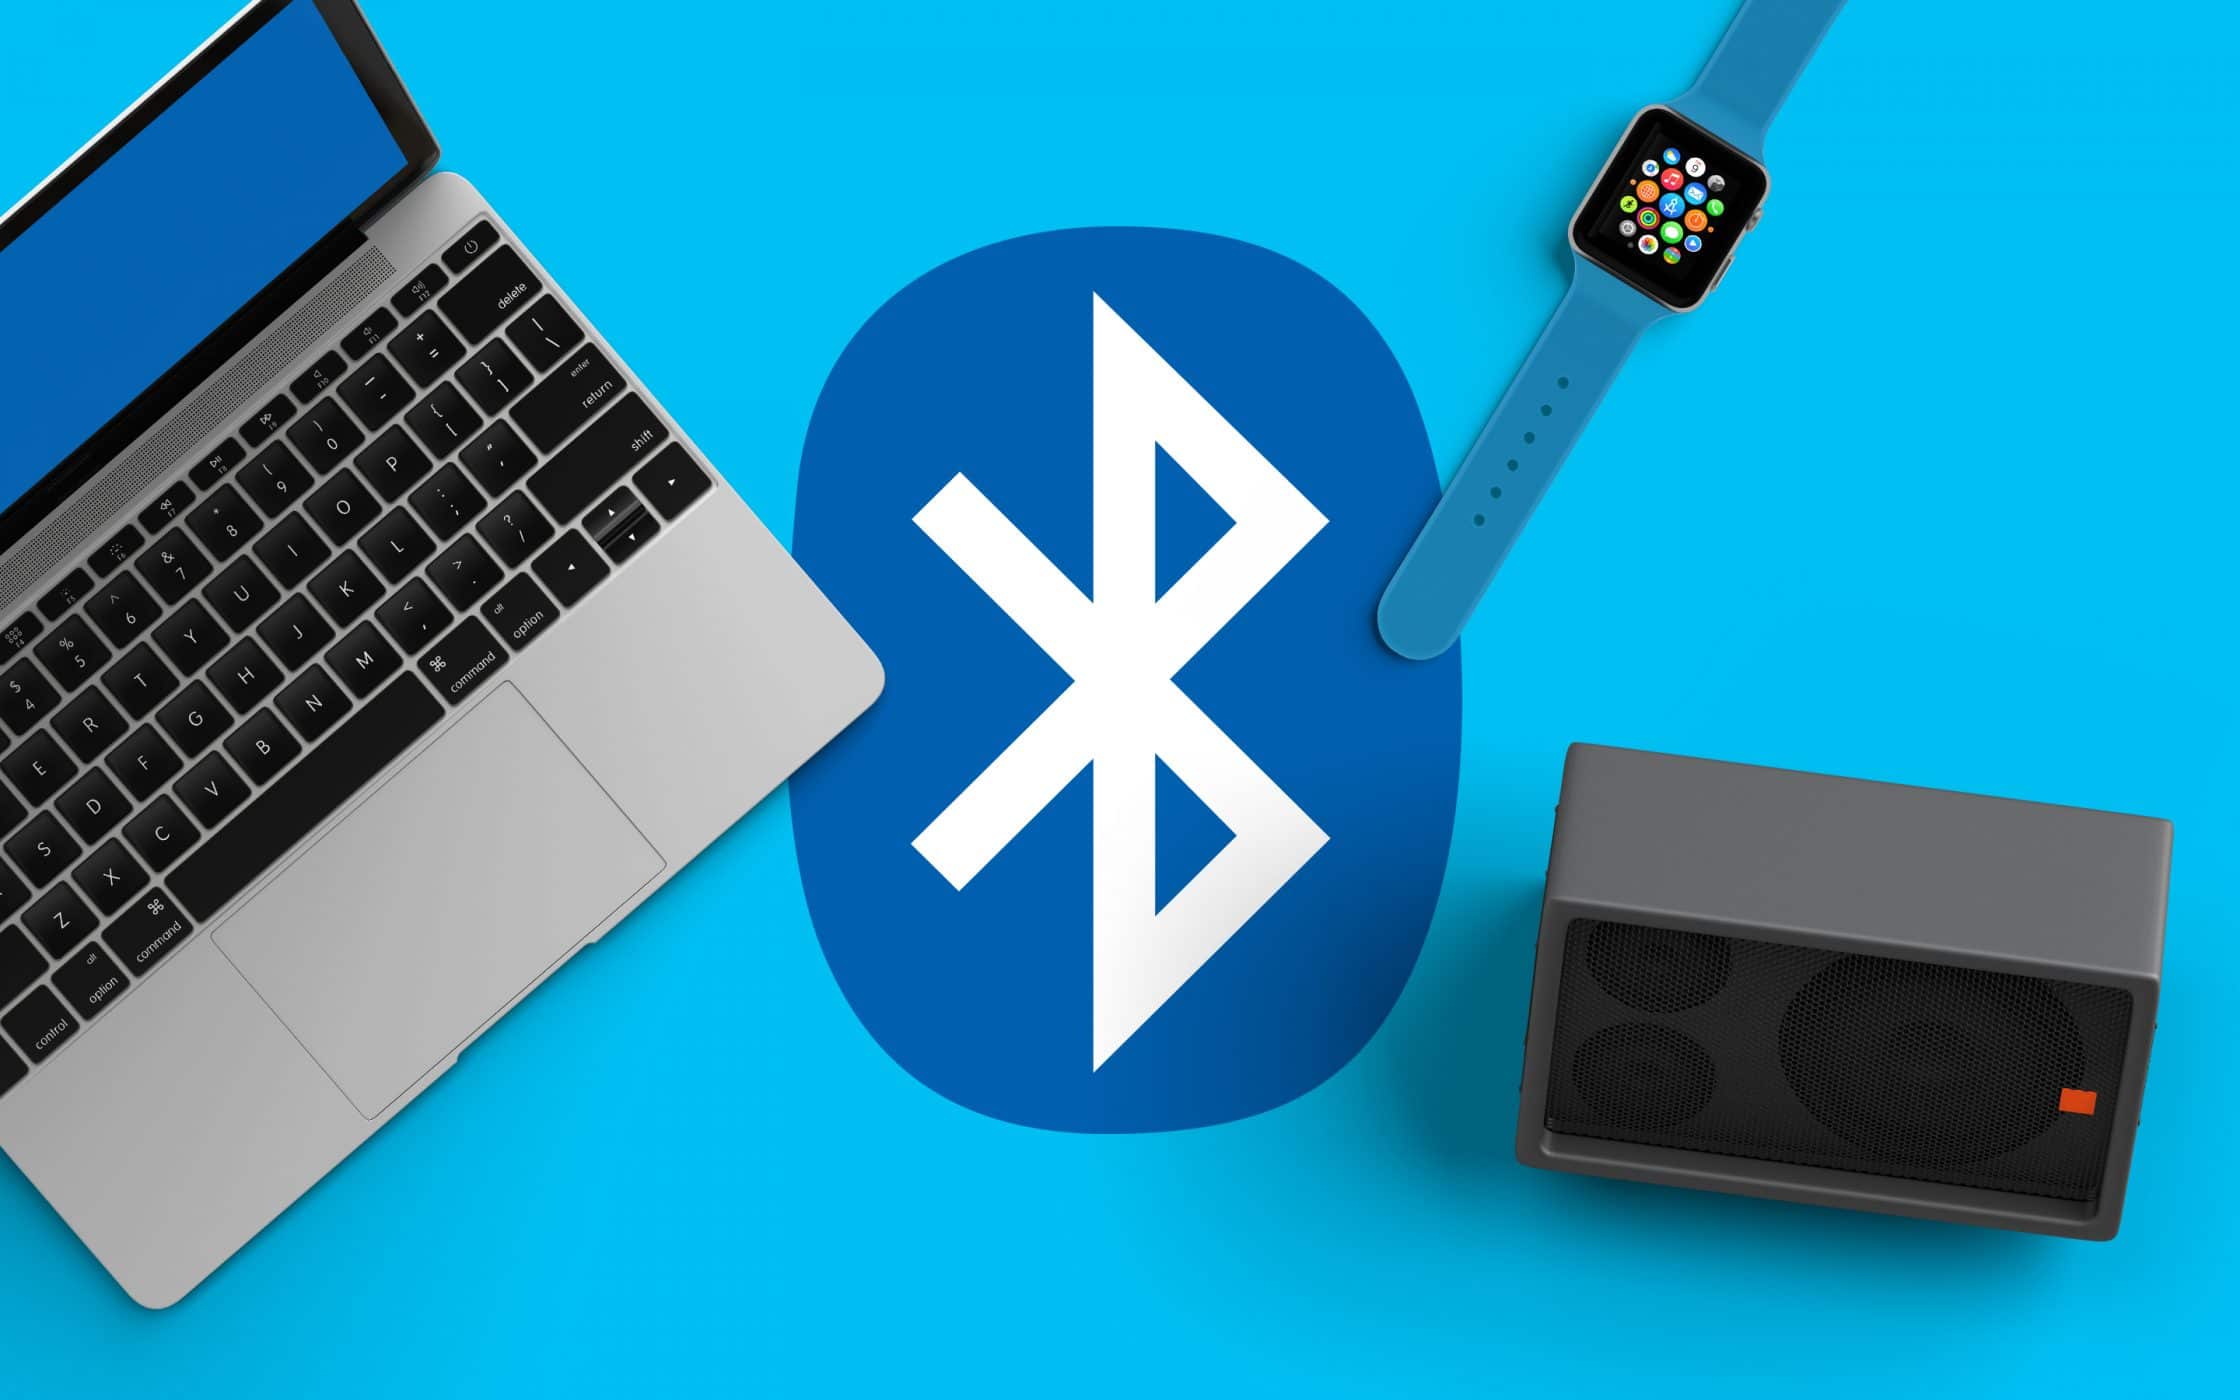 Bluetooth® Core Specification Version 5.3 Feature Enhancements